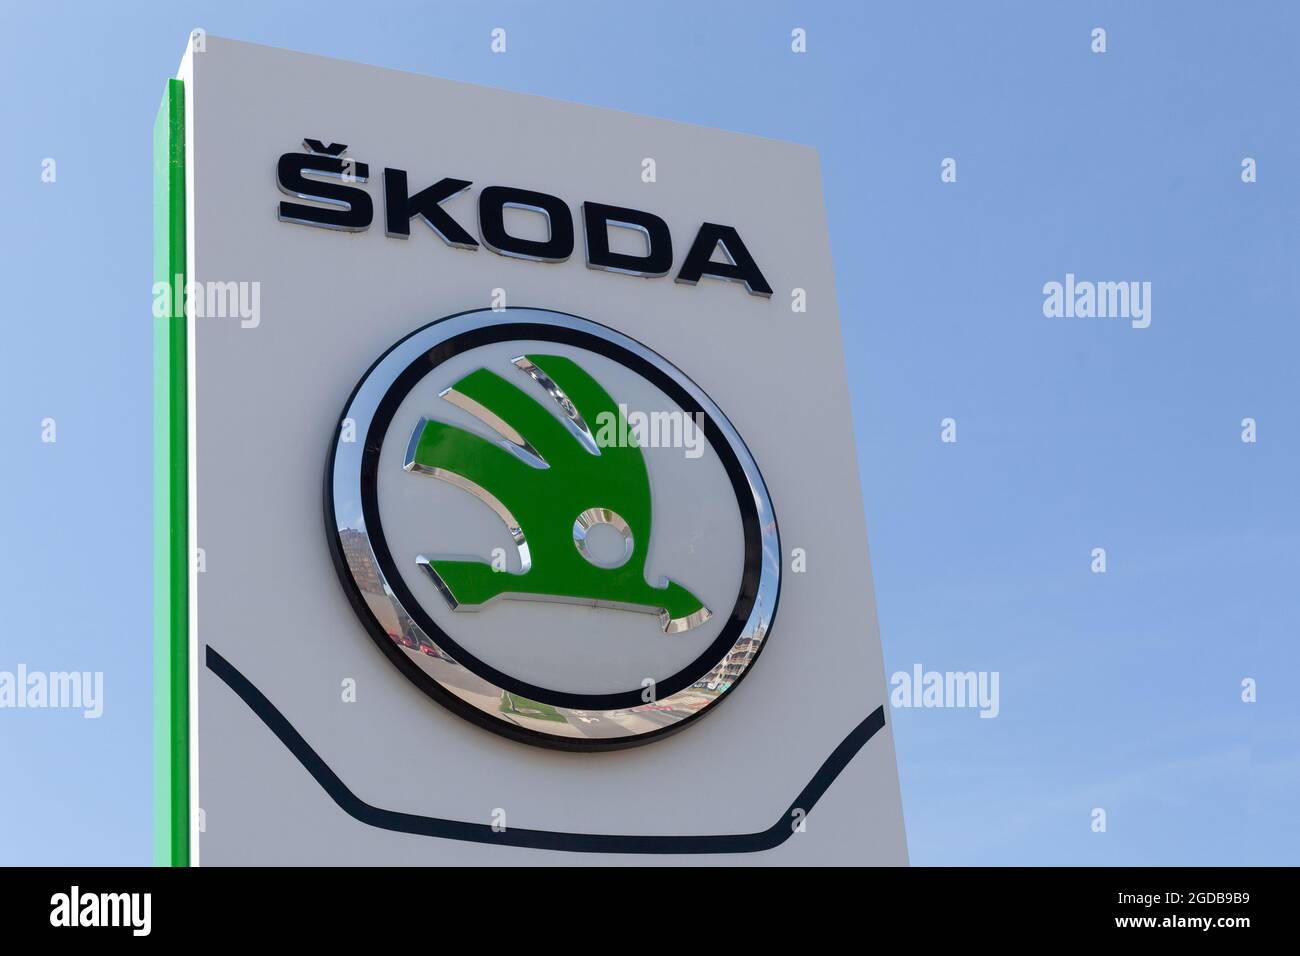 Poznan, POLAND - Jul 30, 2021: Skoda dealership sign in front of the showroom. Stock Photo